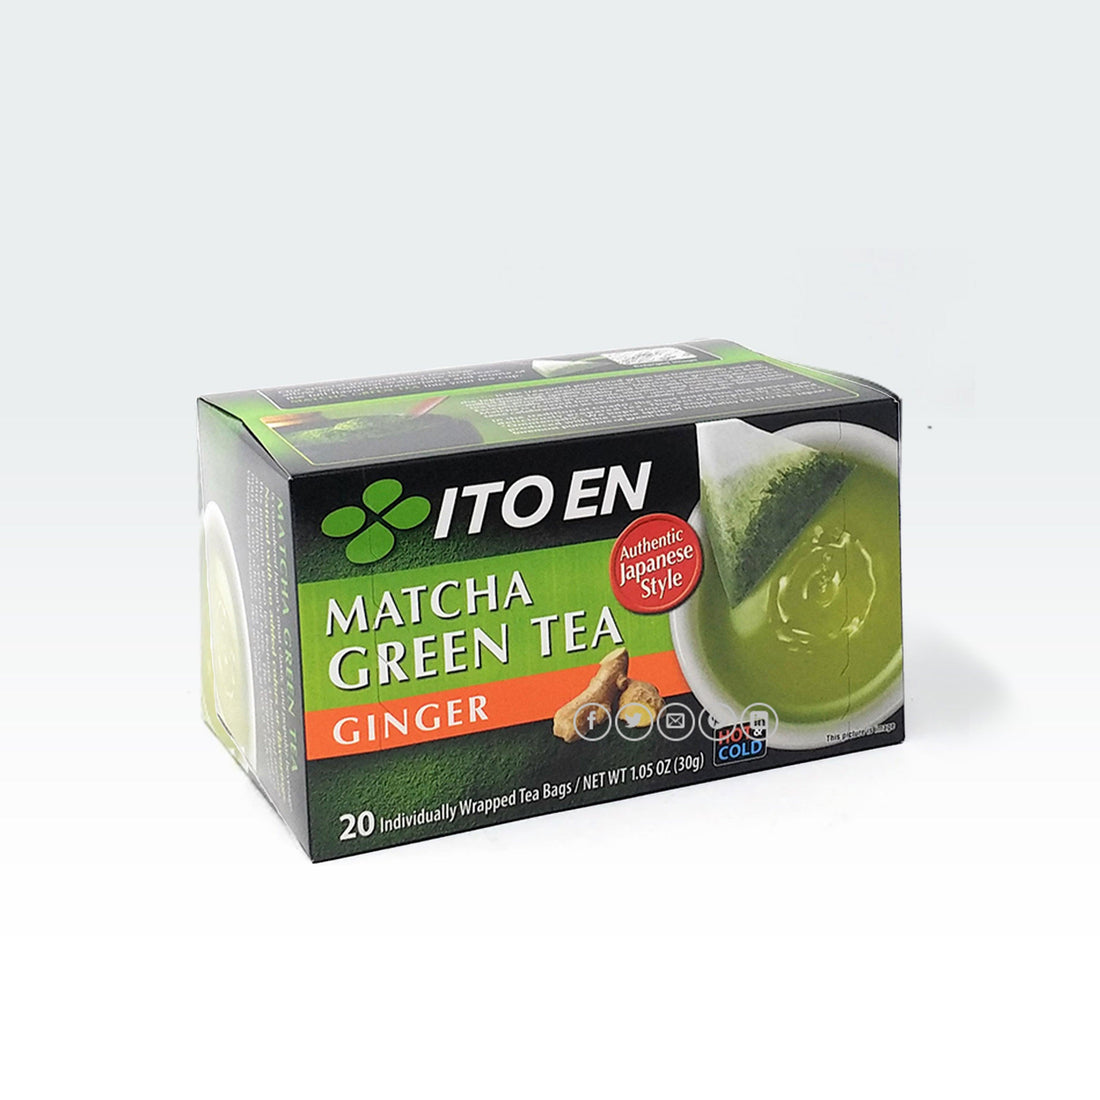 ITO EN Matcha Green Tea Ginger Tea Bags - Anytime Basket